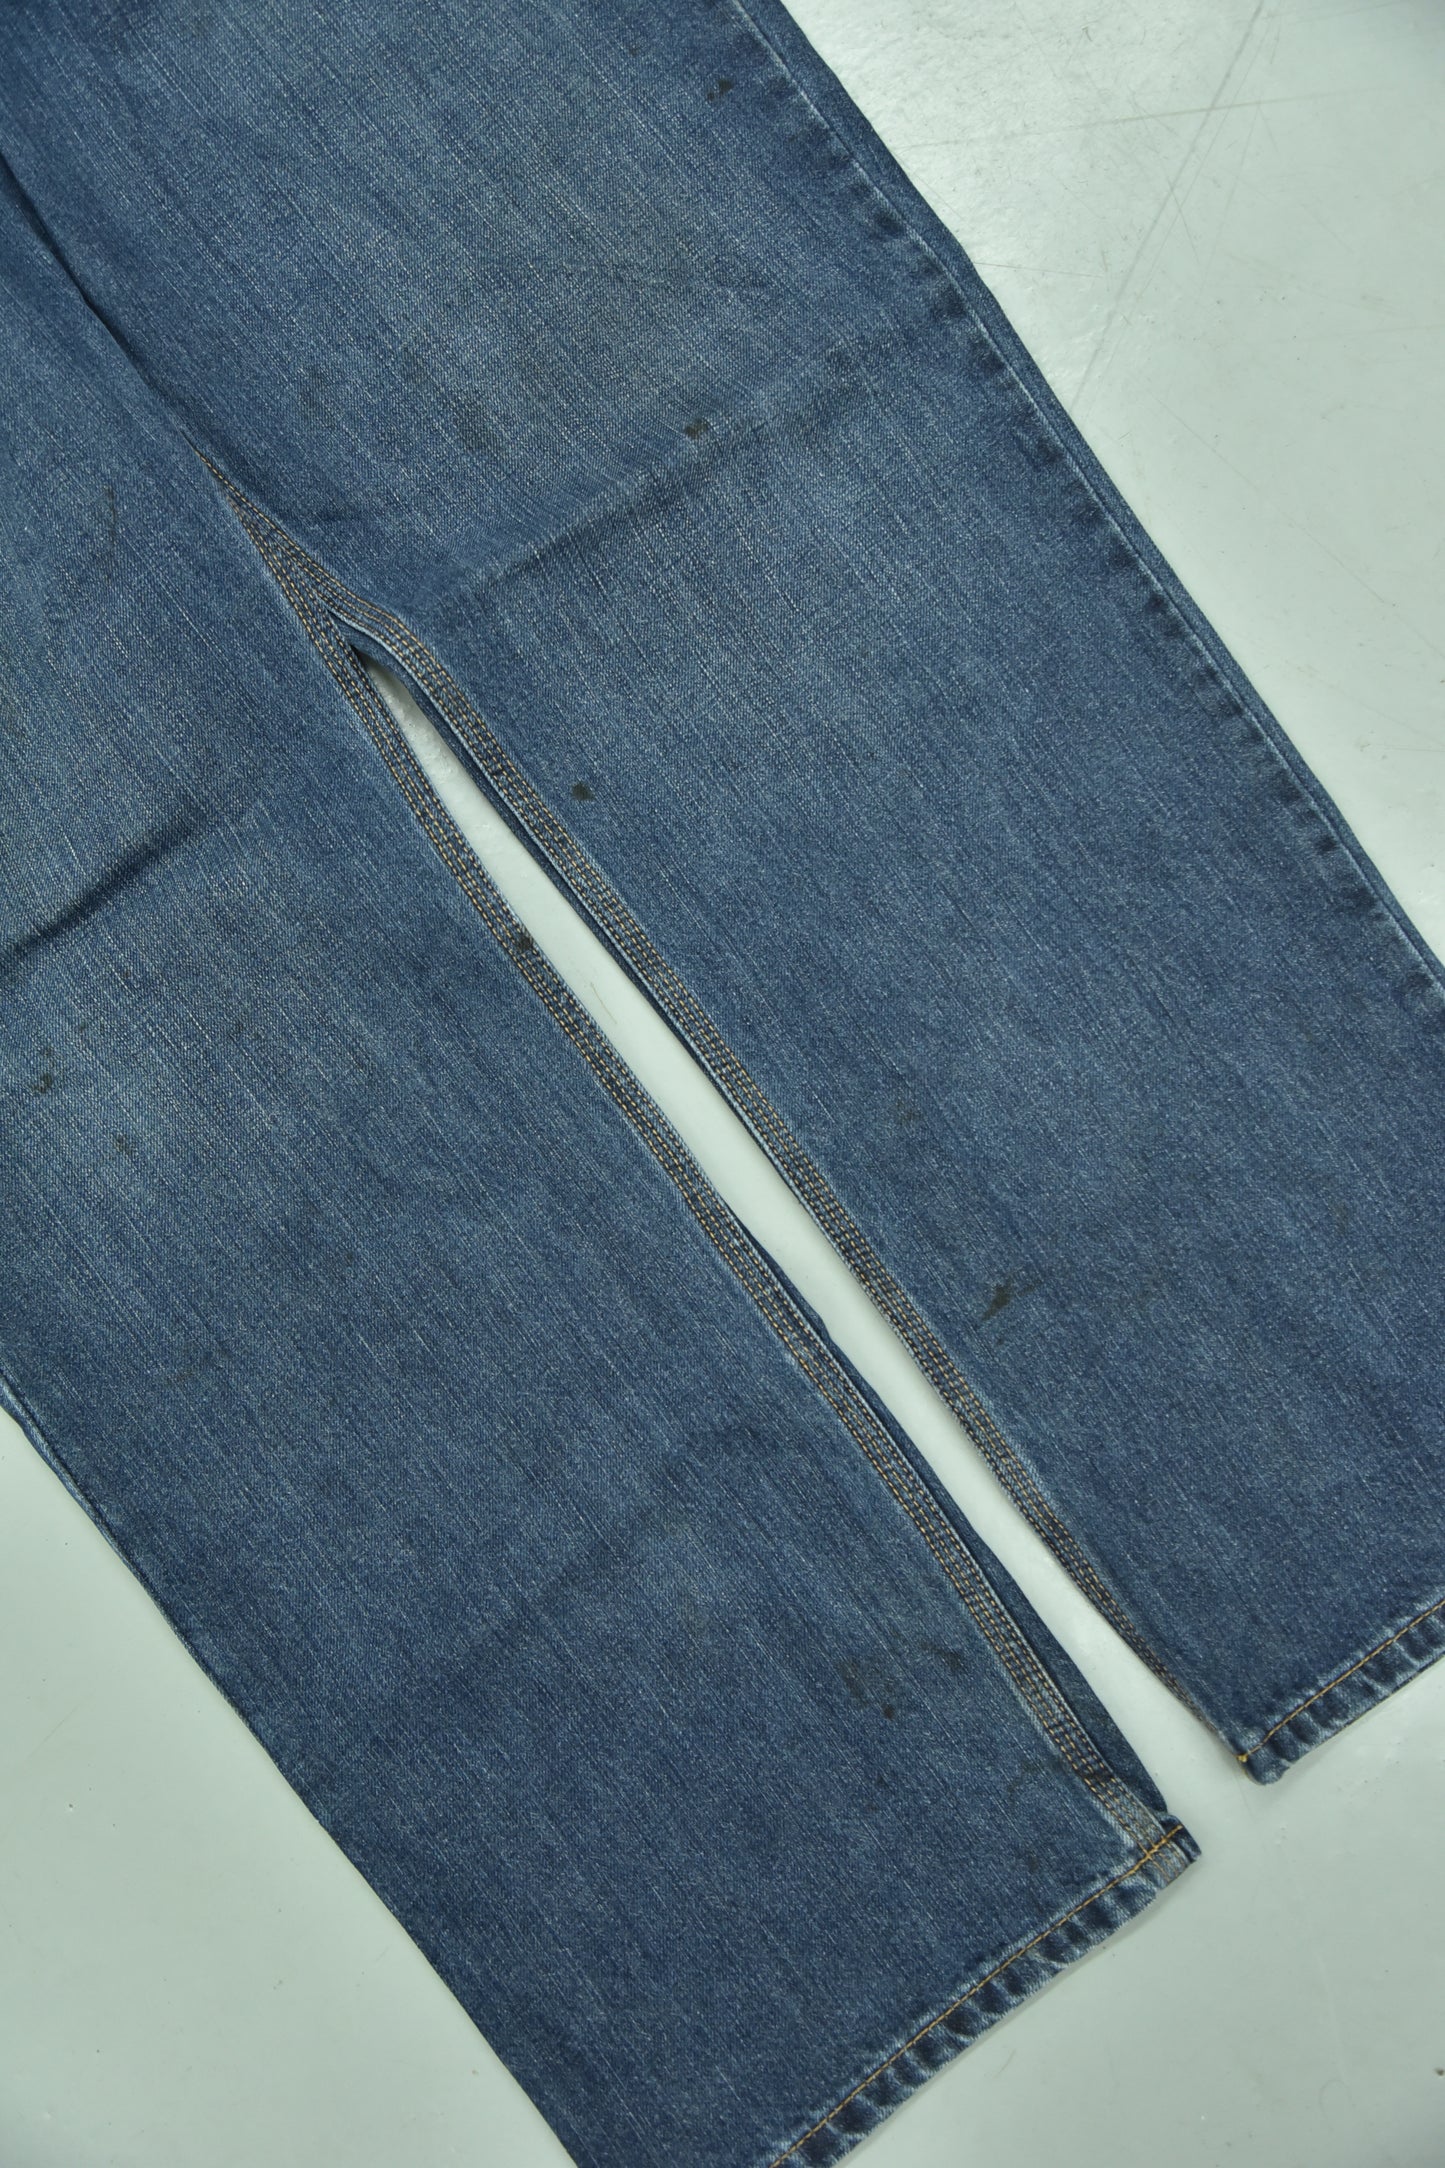 Carhartt Blue Jeans Vintage / 36x32